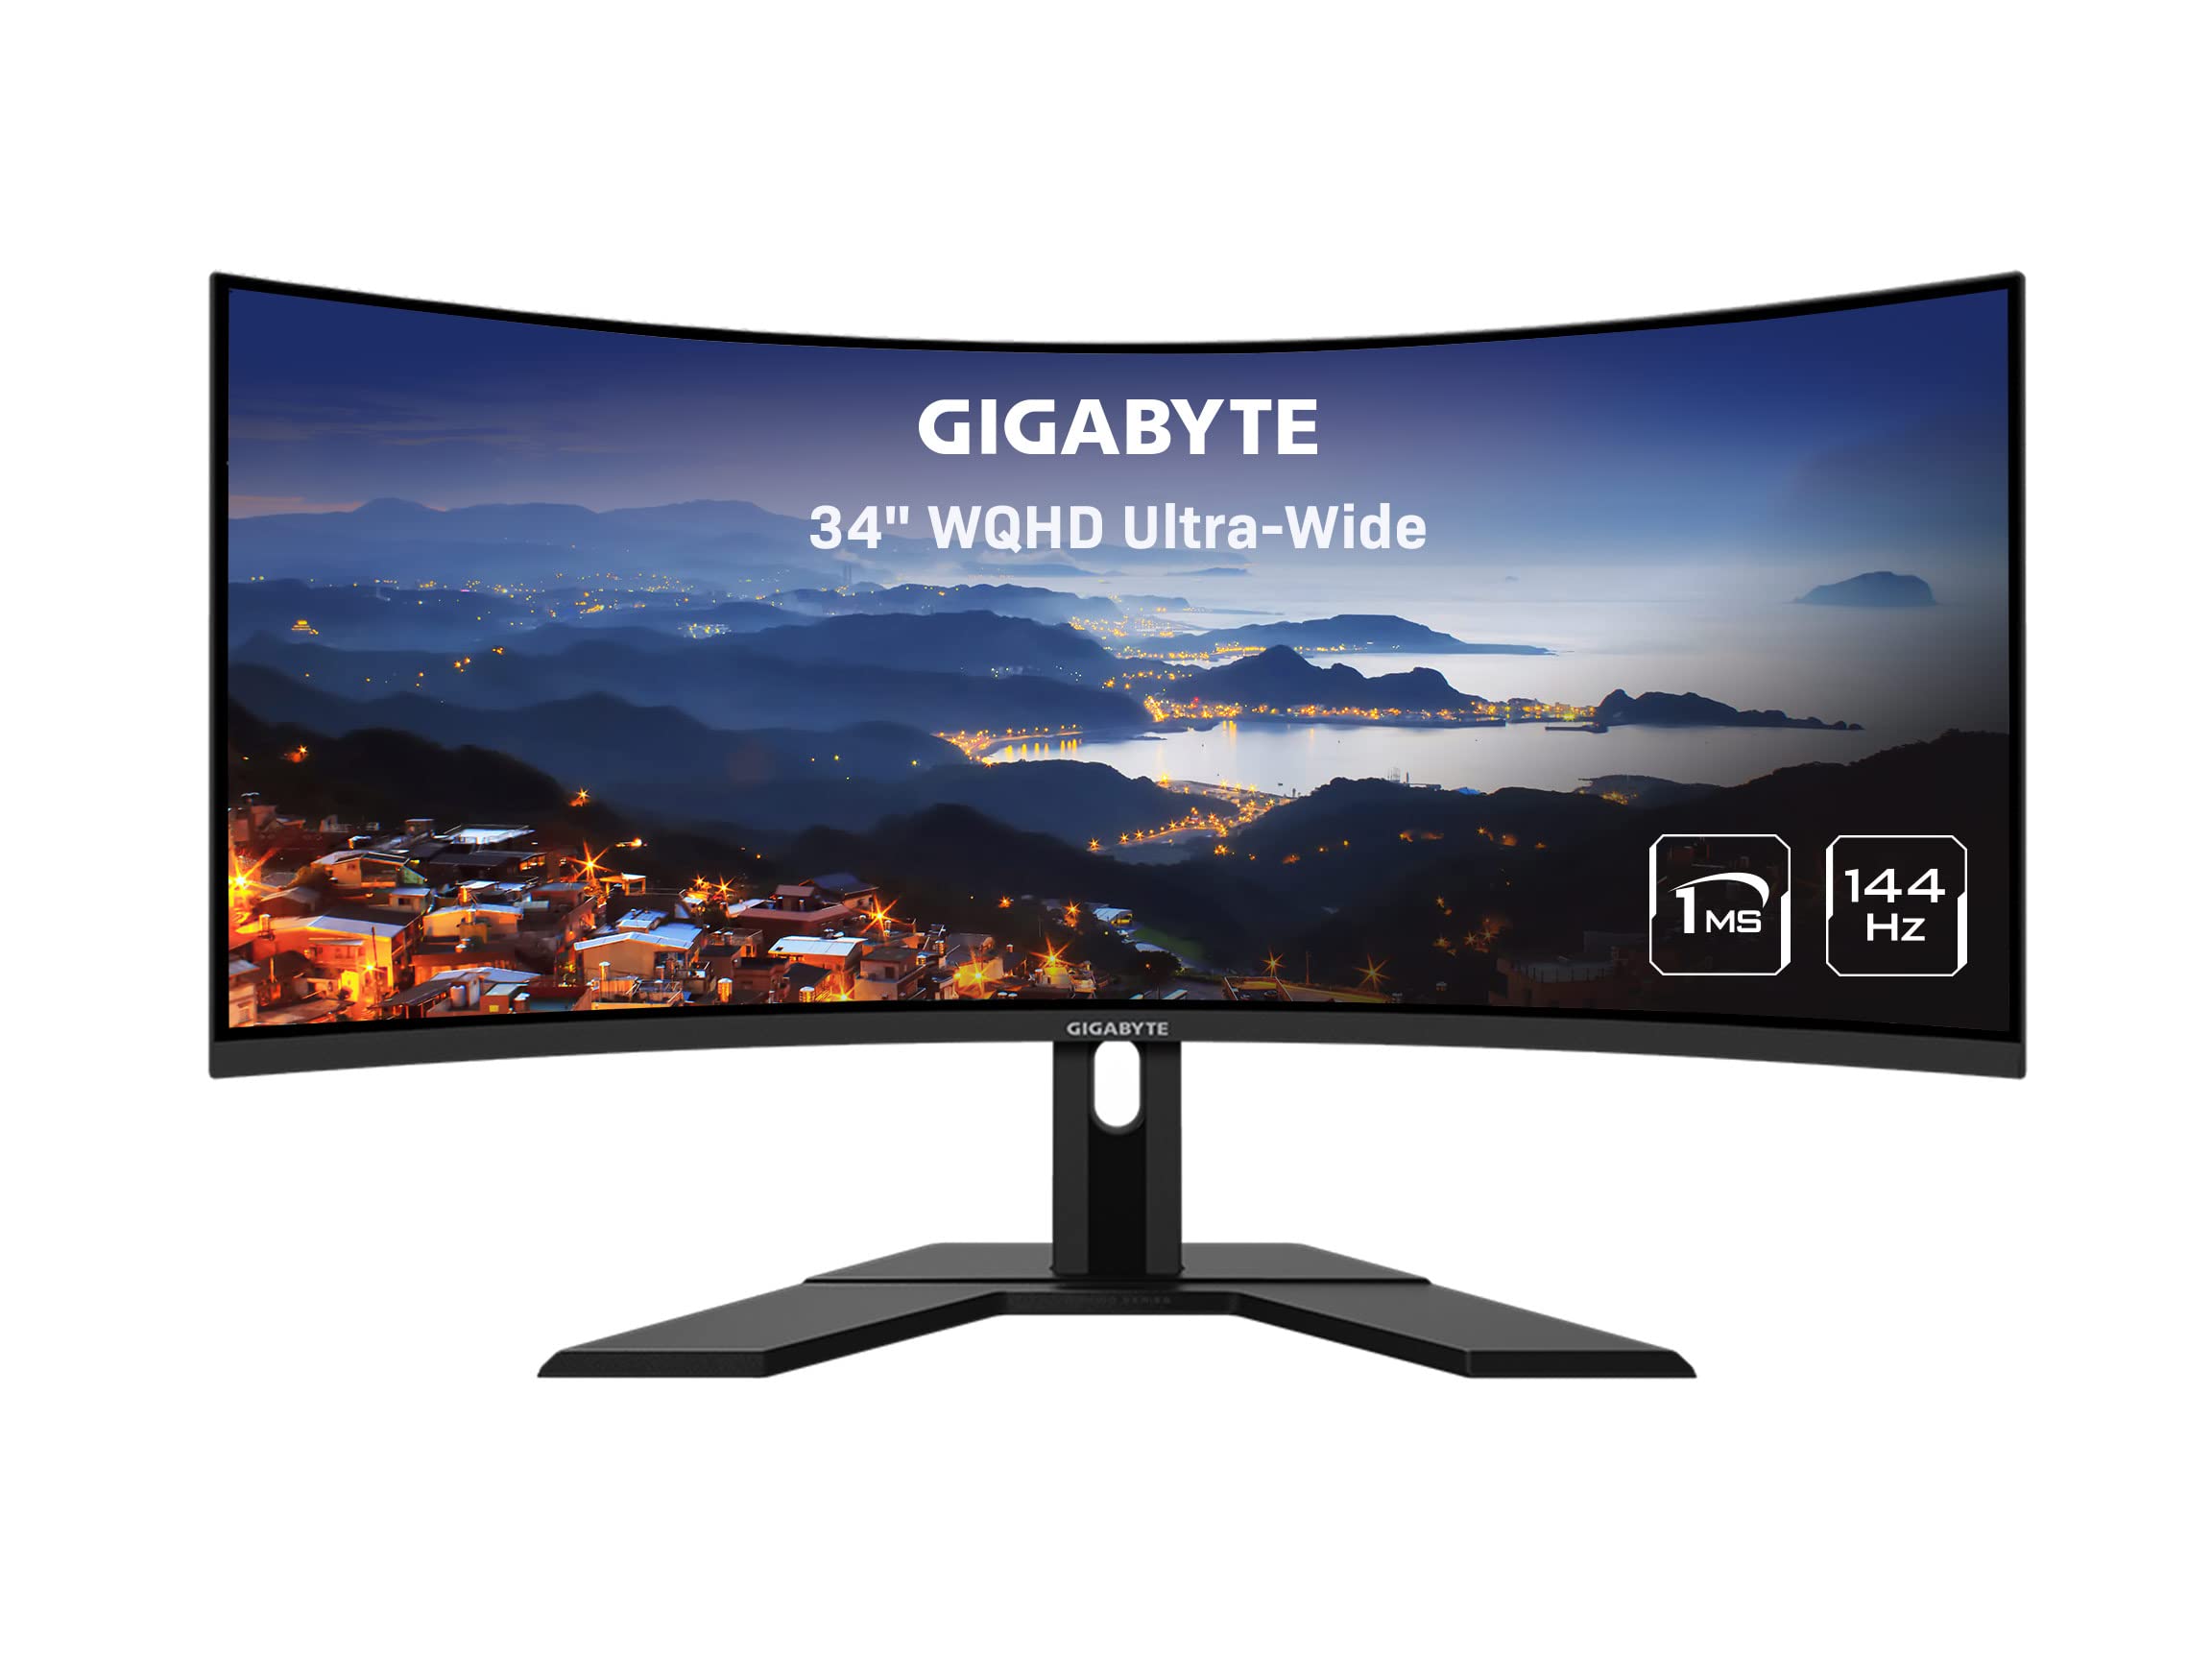 Gigabyte G34WQC A 34” curved (1500R) VA 3440 x 1440 144hz gaming monitor $349.99